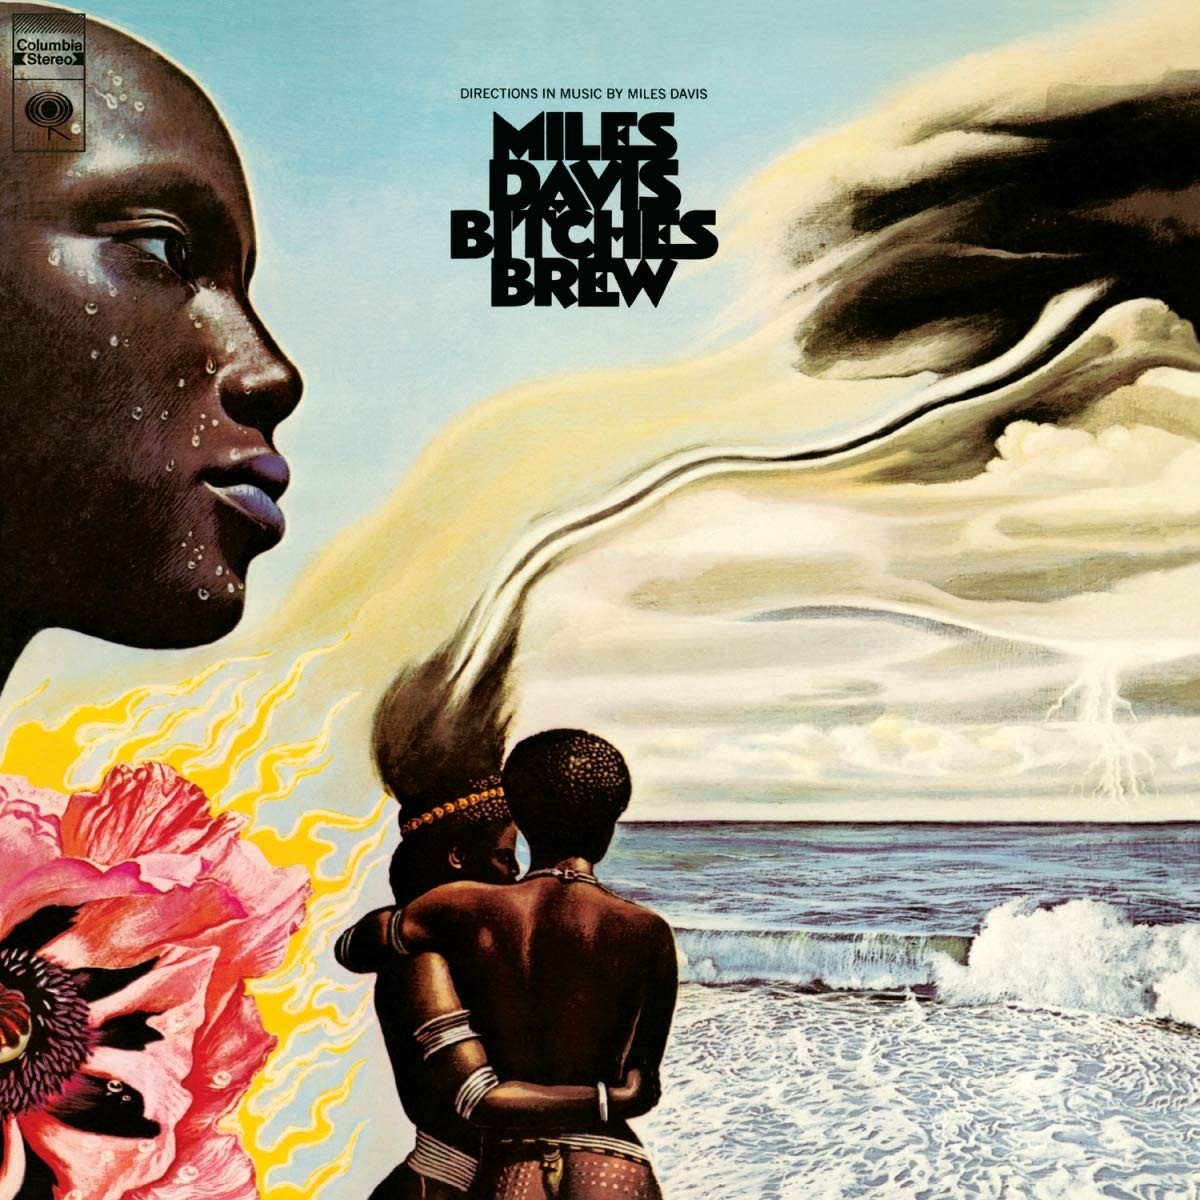 MILES DAVIS - BITCHES BREW Vinyl LP